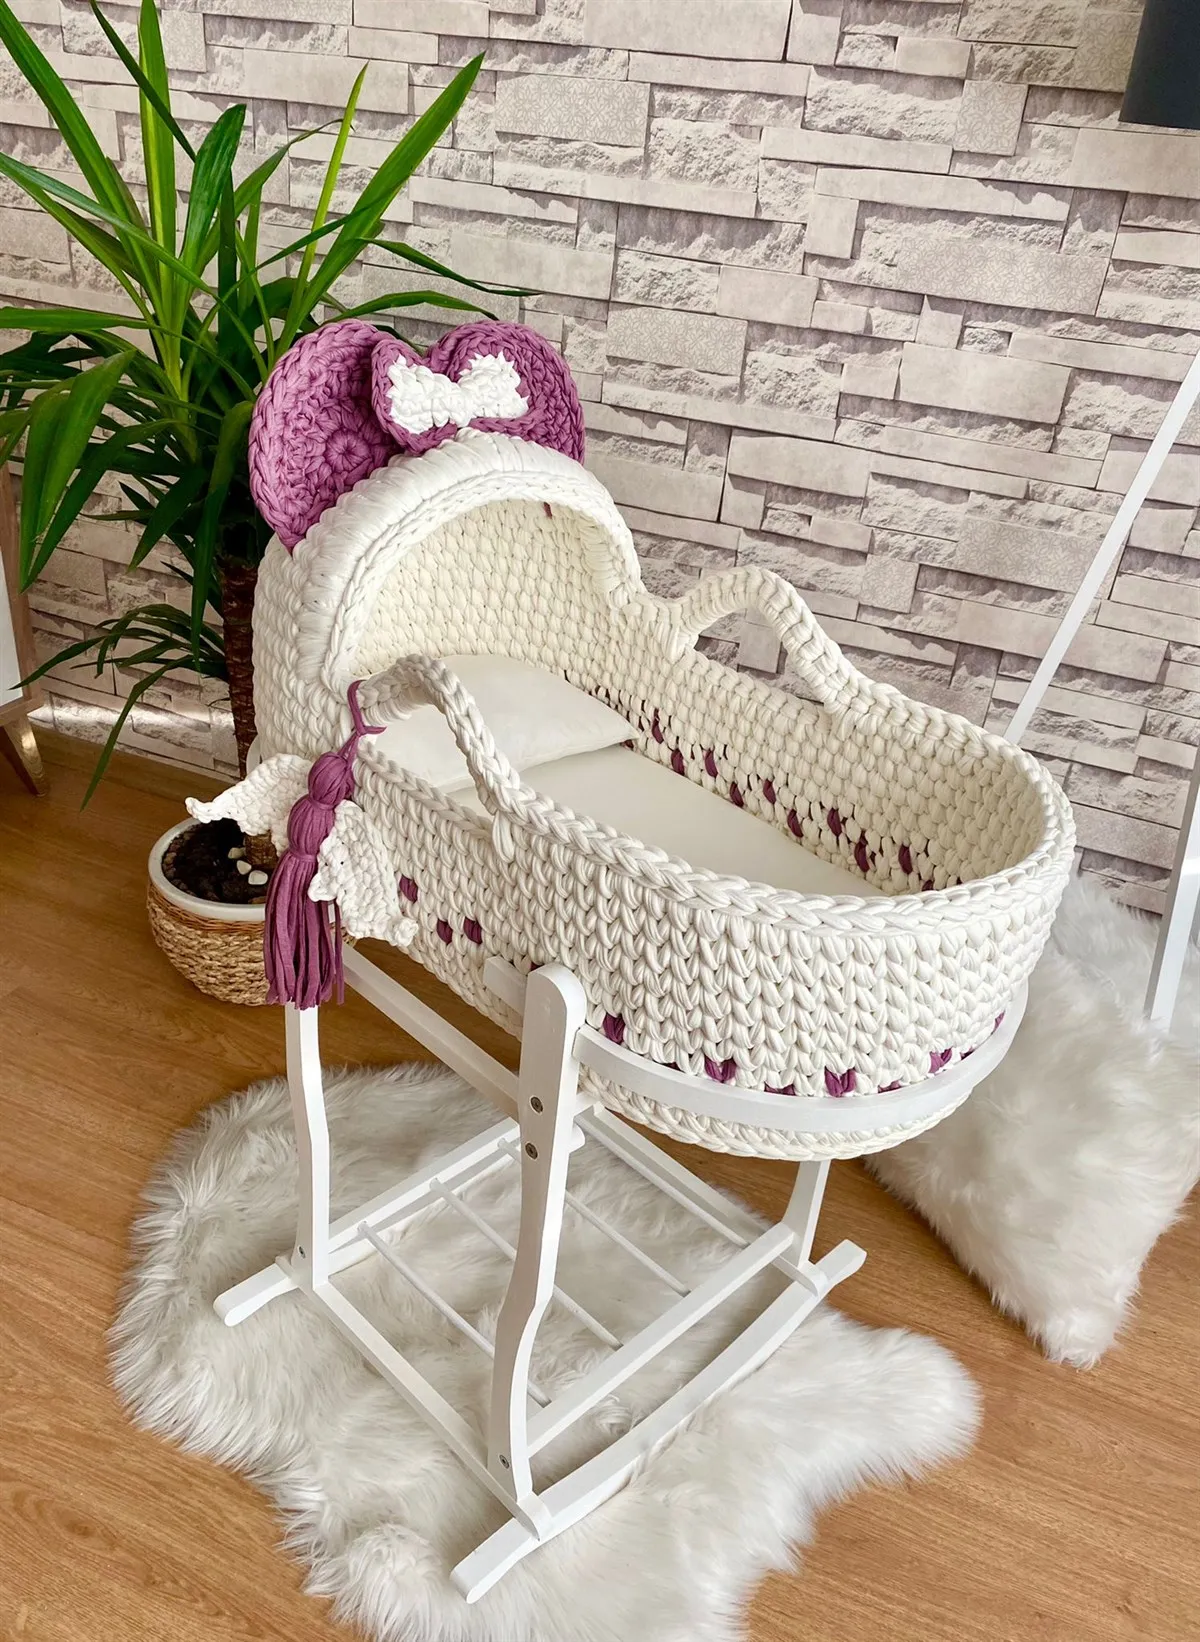 Jaju Baby Moses Basket Newborn Baby Plum Ear Pattern Knitted Stroller